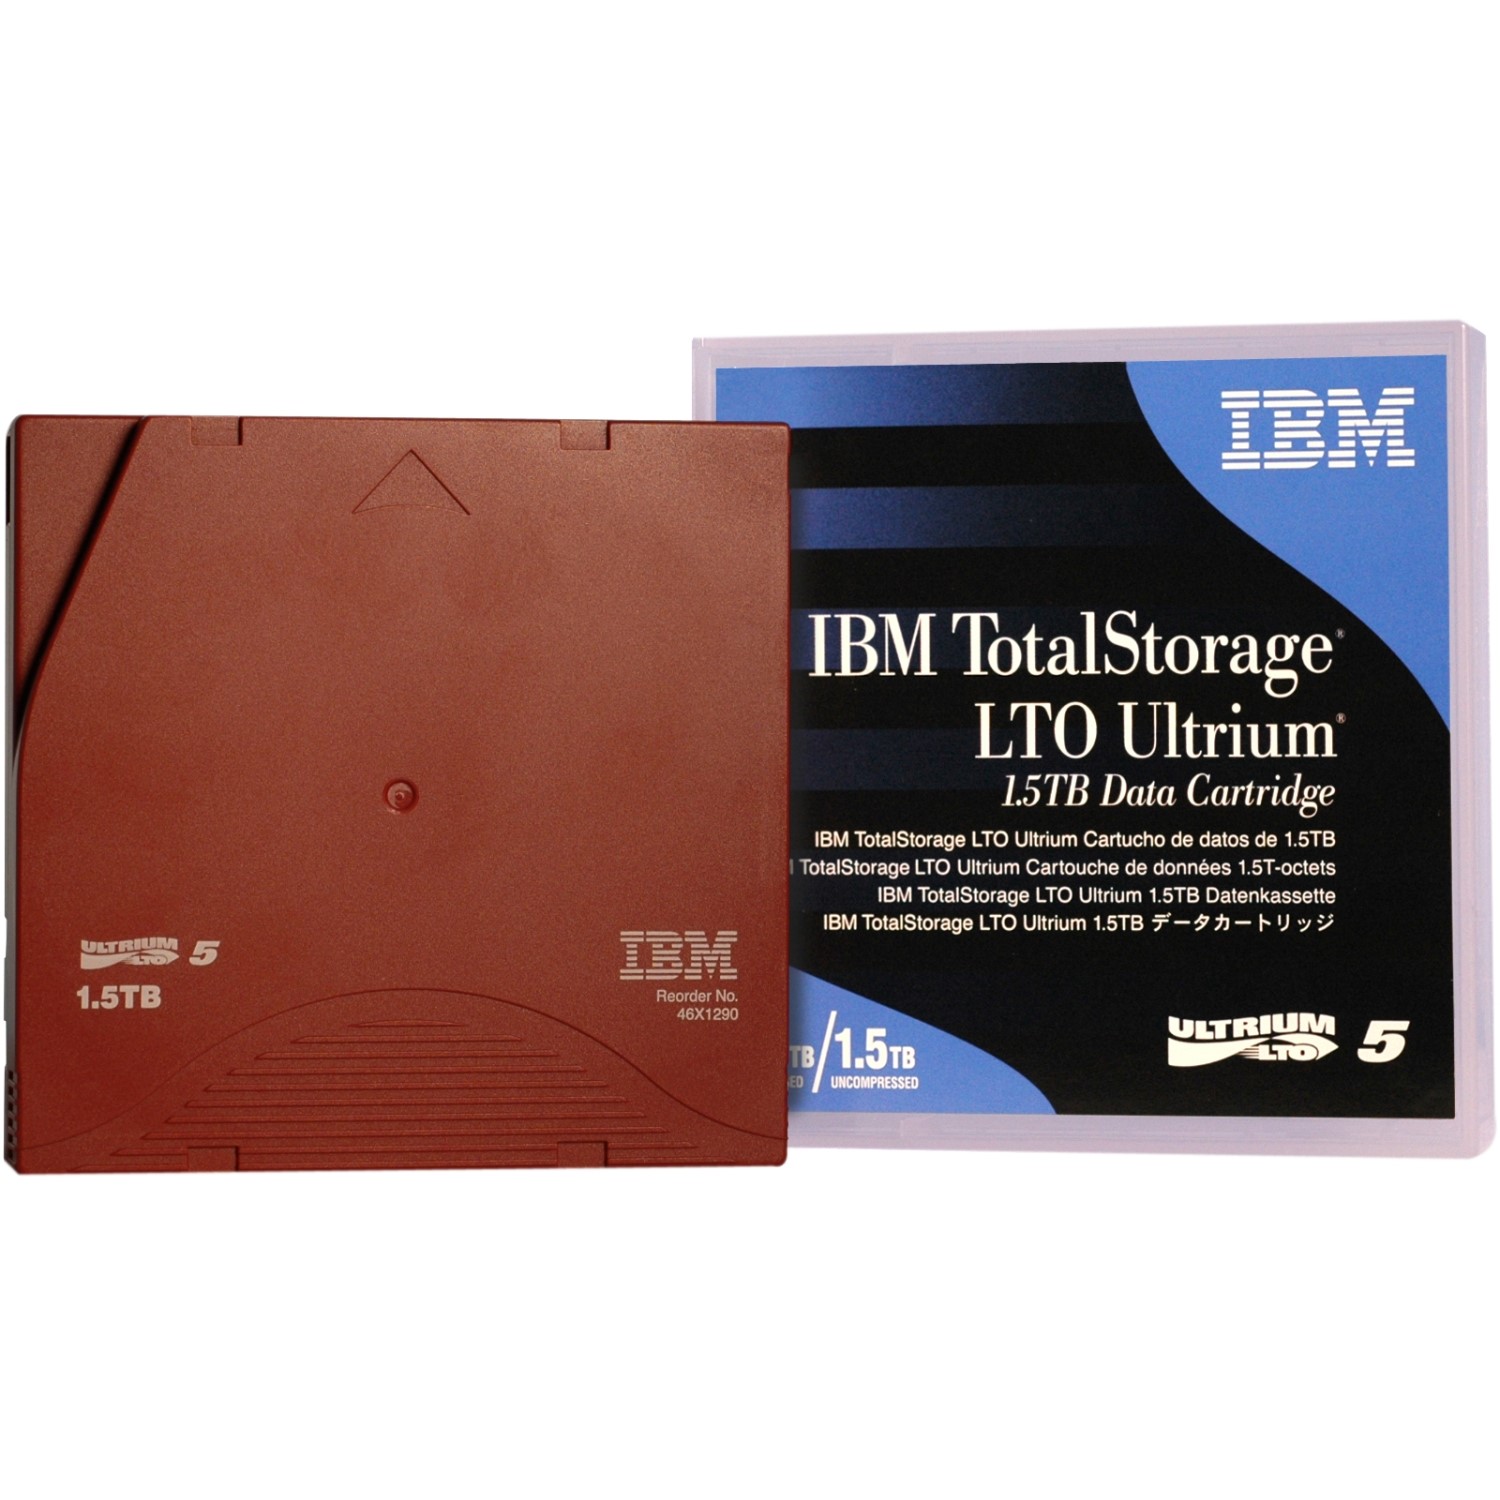 46X1290 IBM Storage media LTO Ultrium 1.5 TB